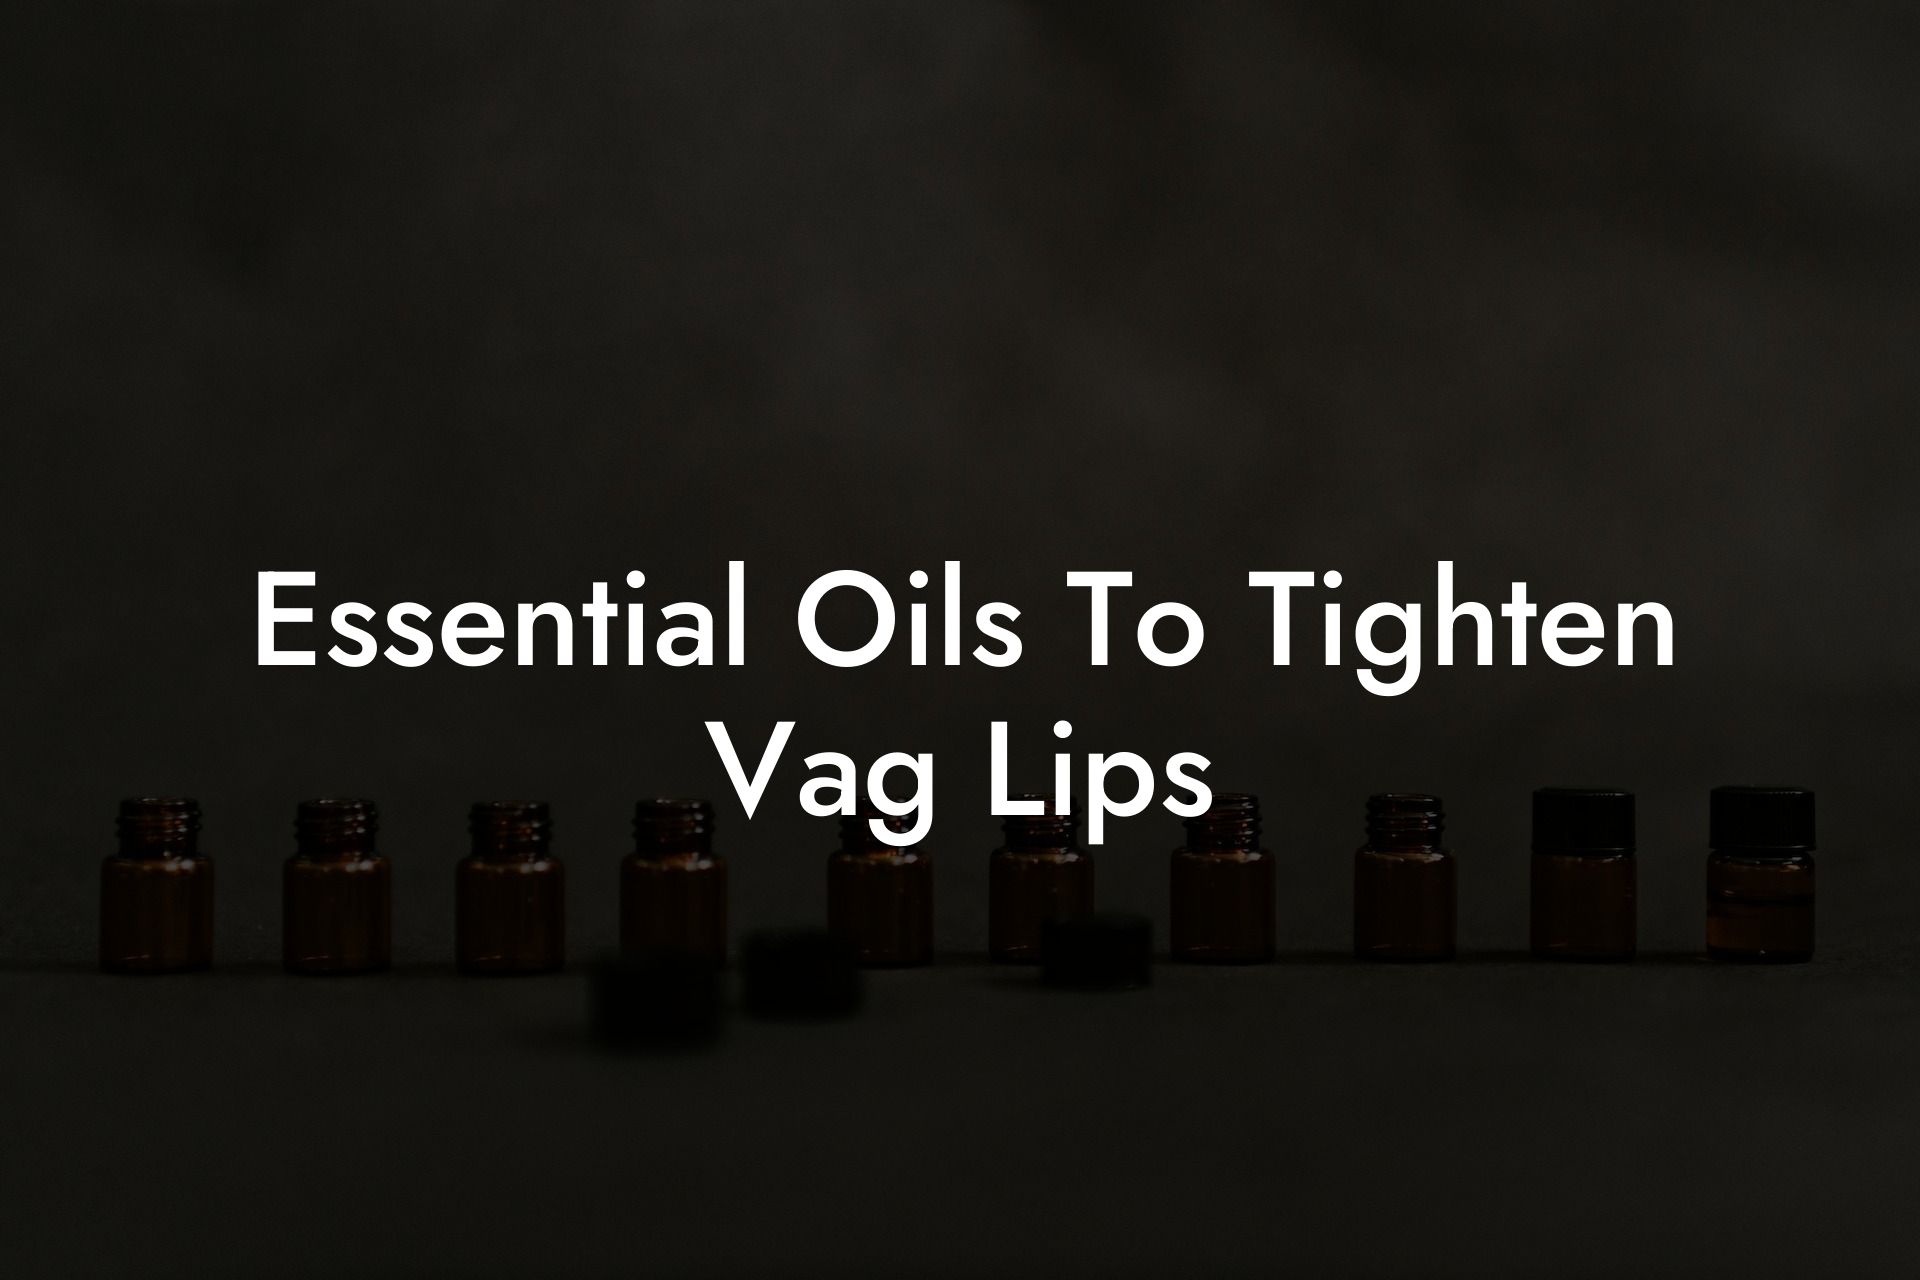 Essential Oils To Tighten Vag Lips